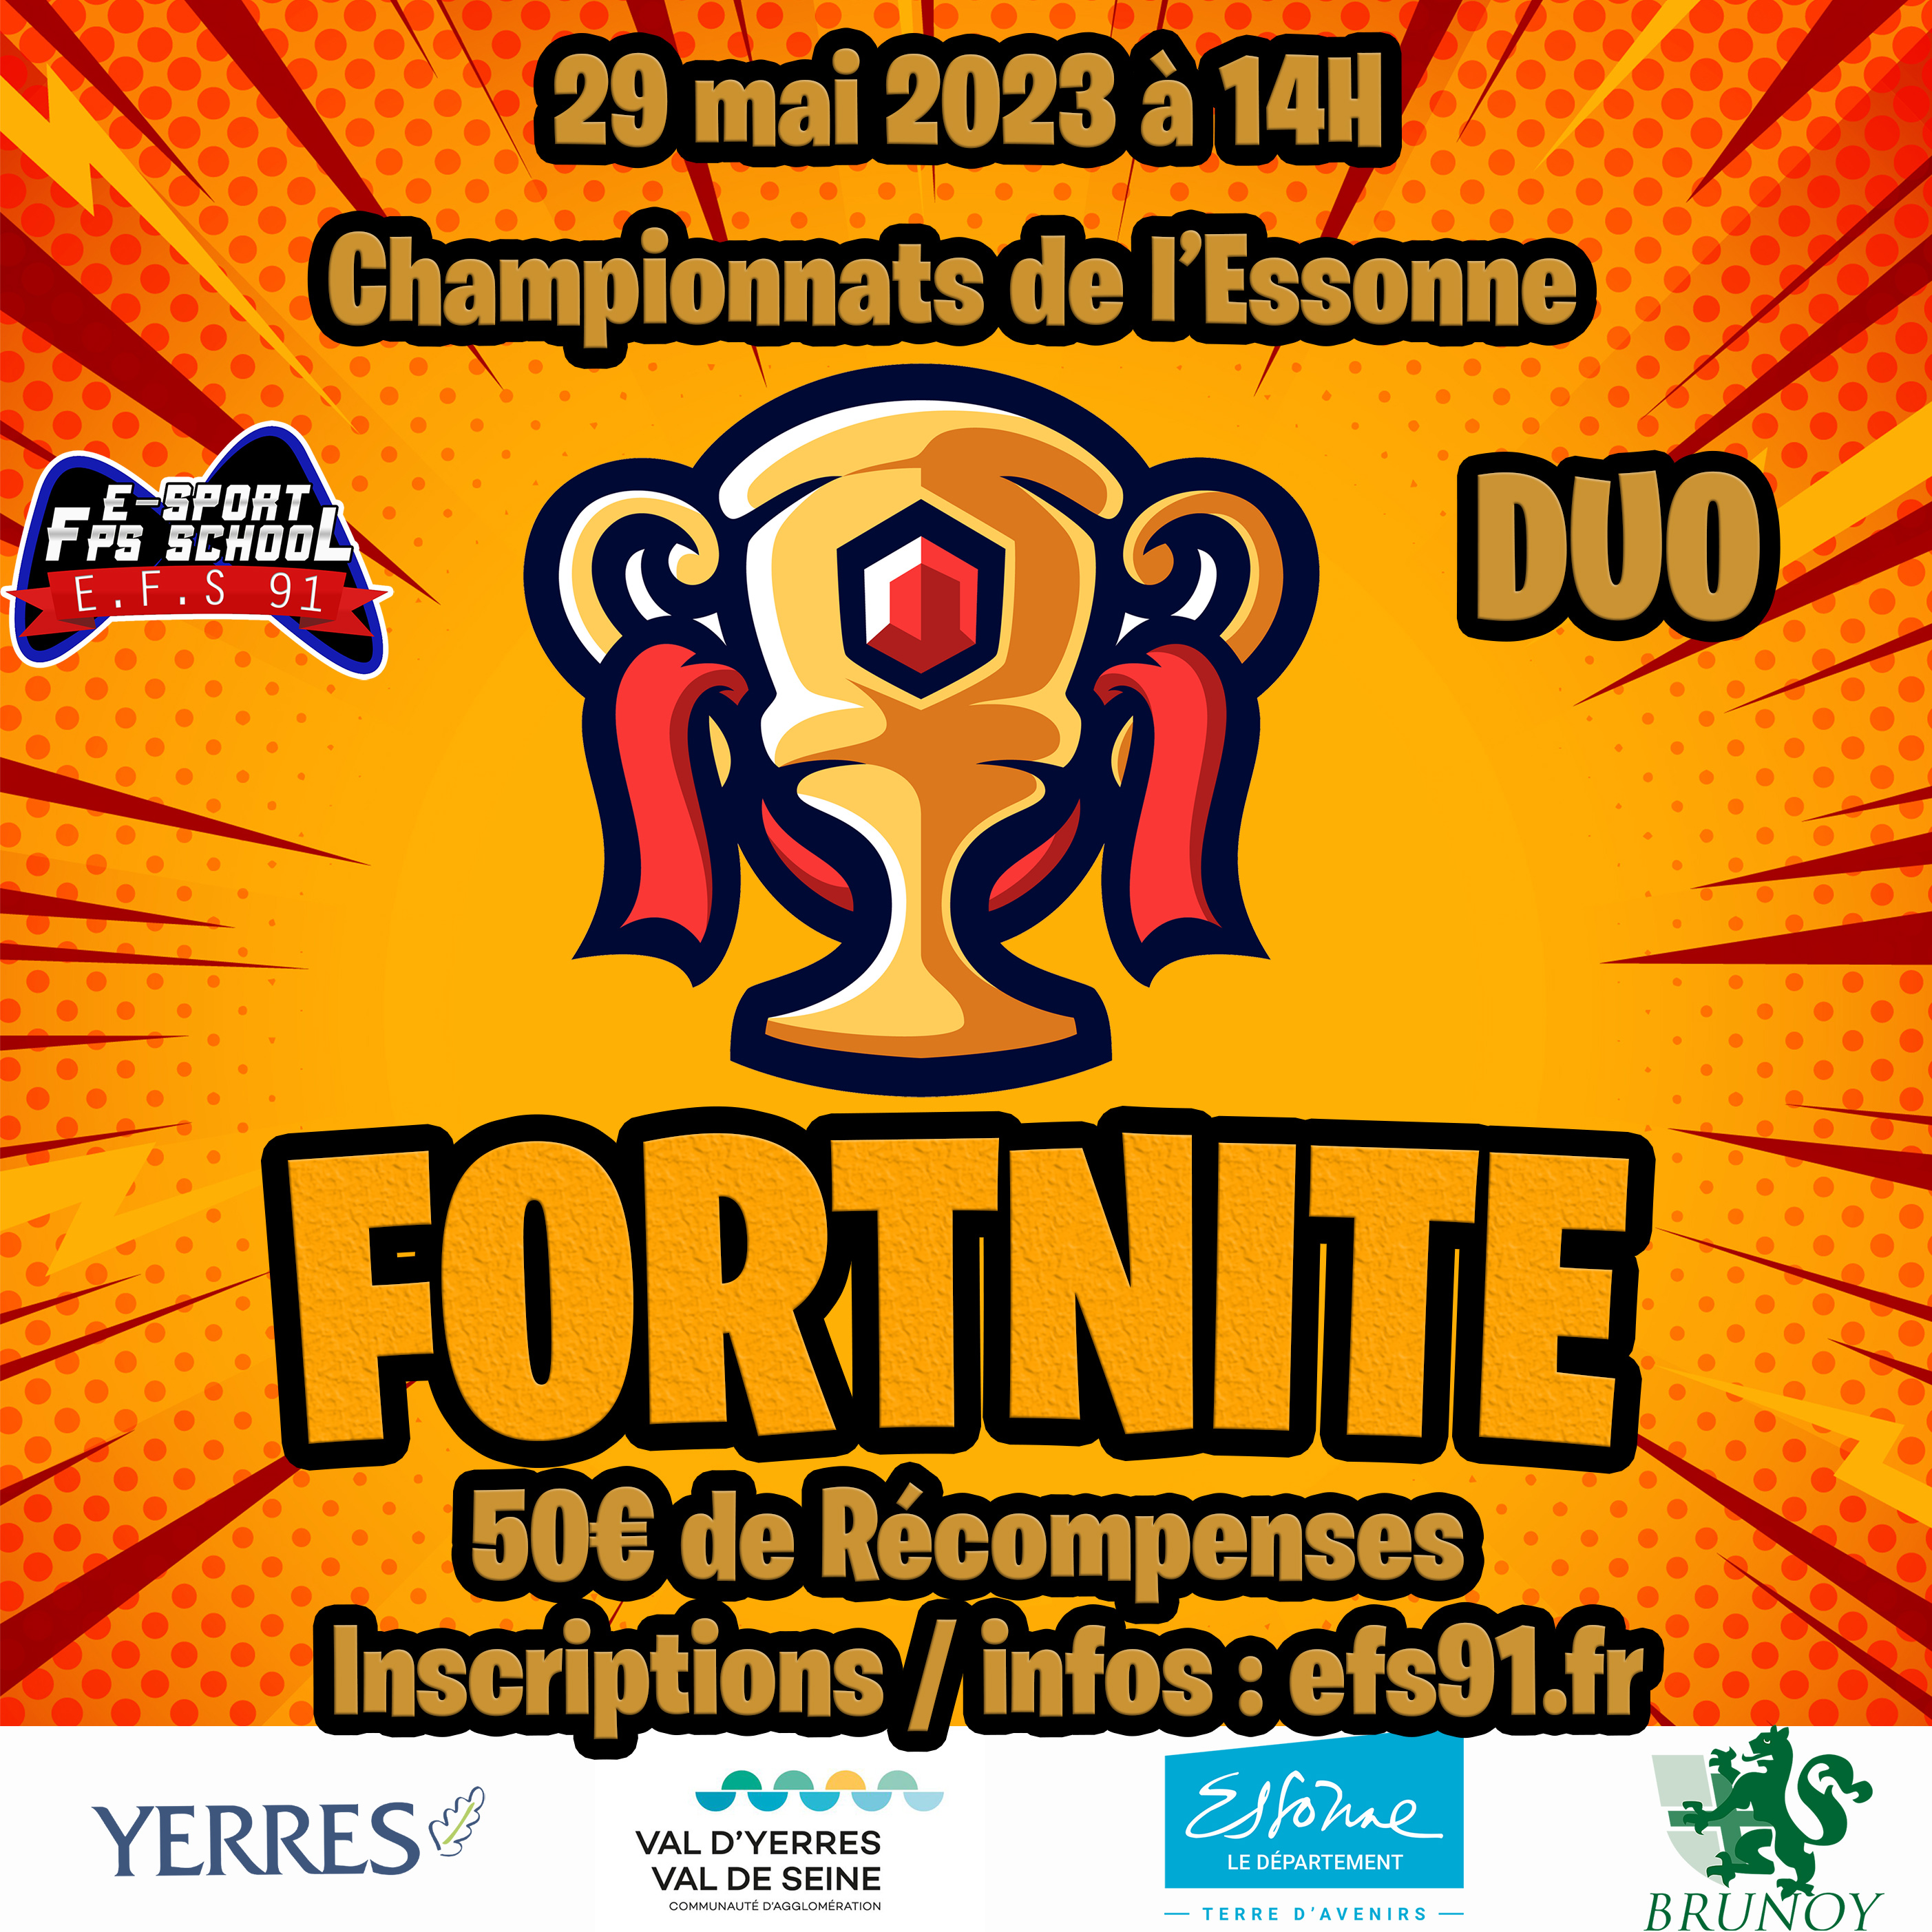 Championnats de l’Essonne 2023 Fortnite DUO